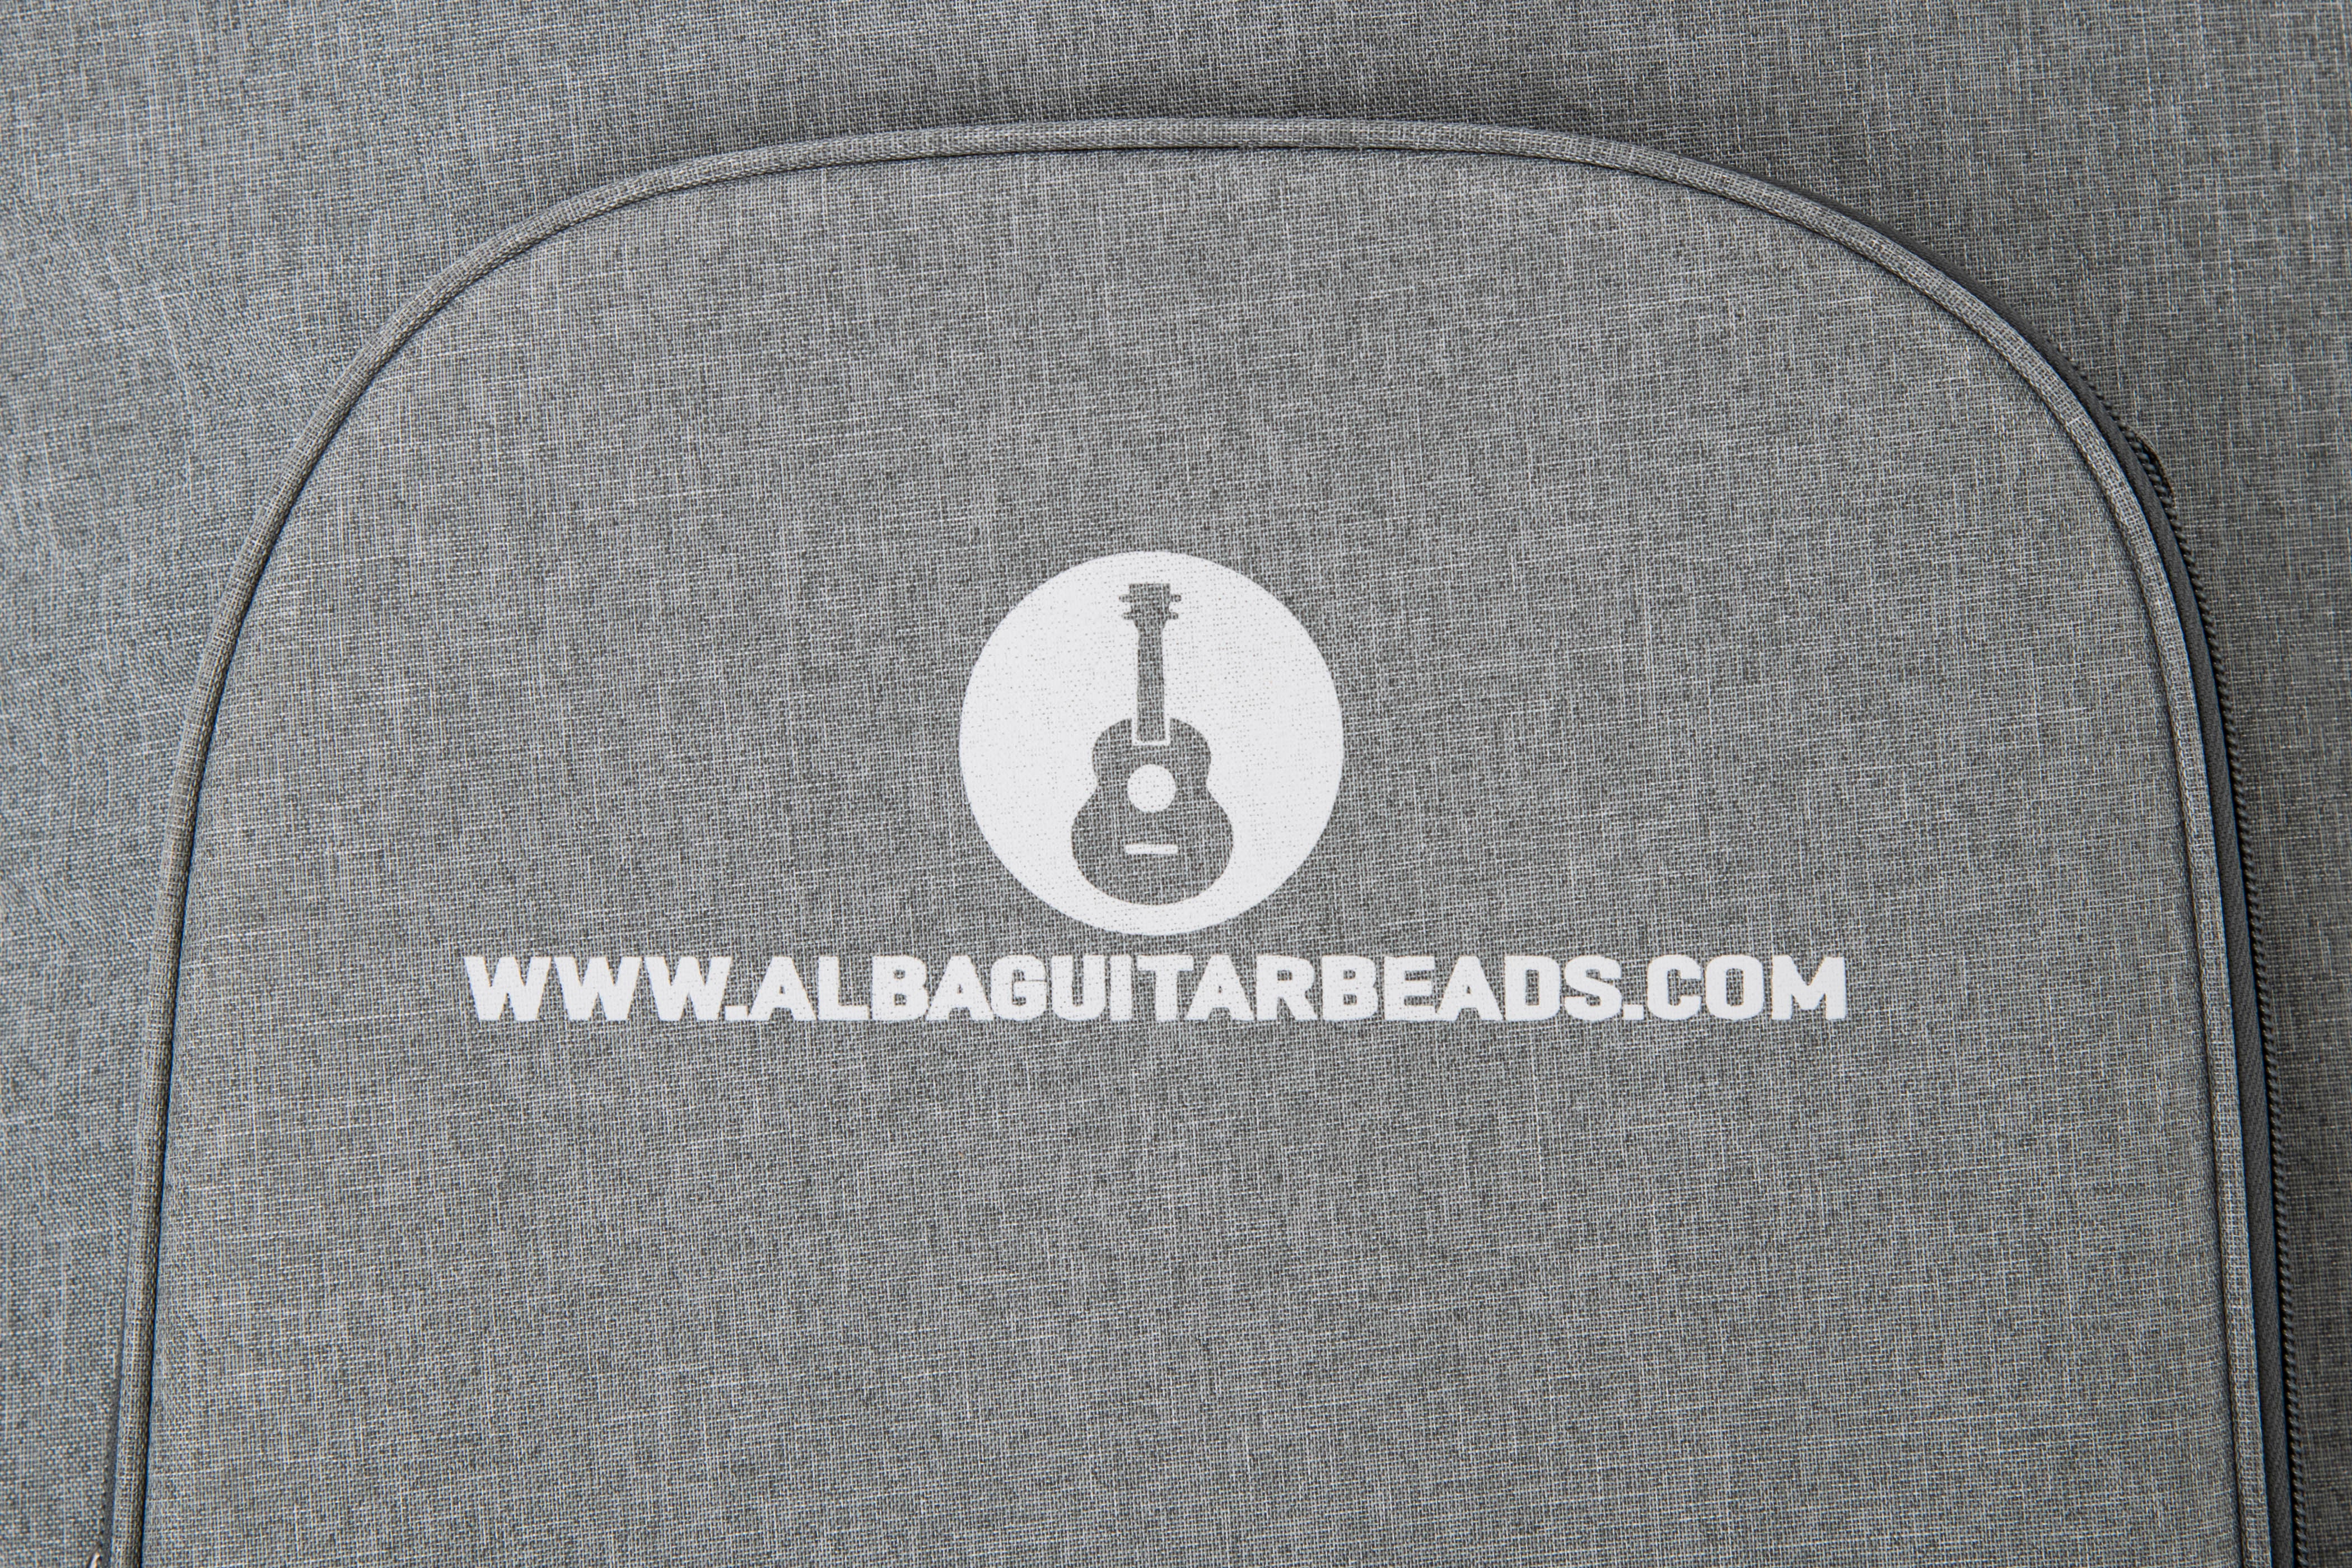 Alba Guitar Beads protective cover for carbon guitar cases, travel cover for a classical guitar and flamenco guitar carbon cases